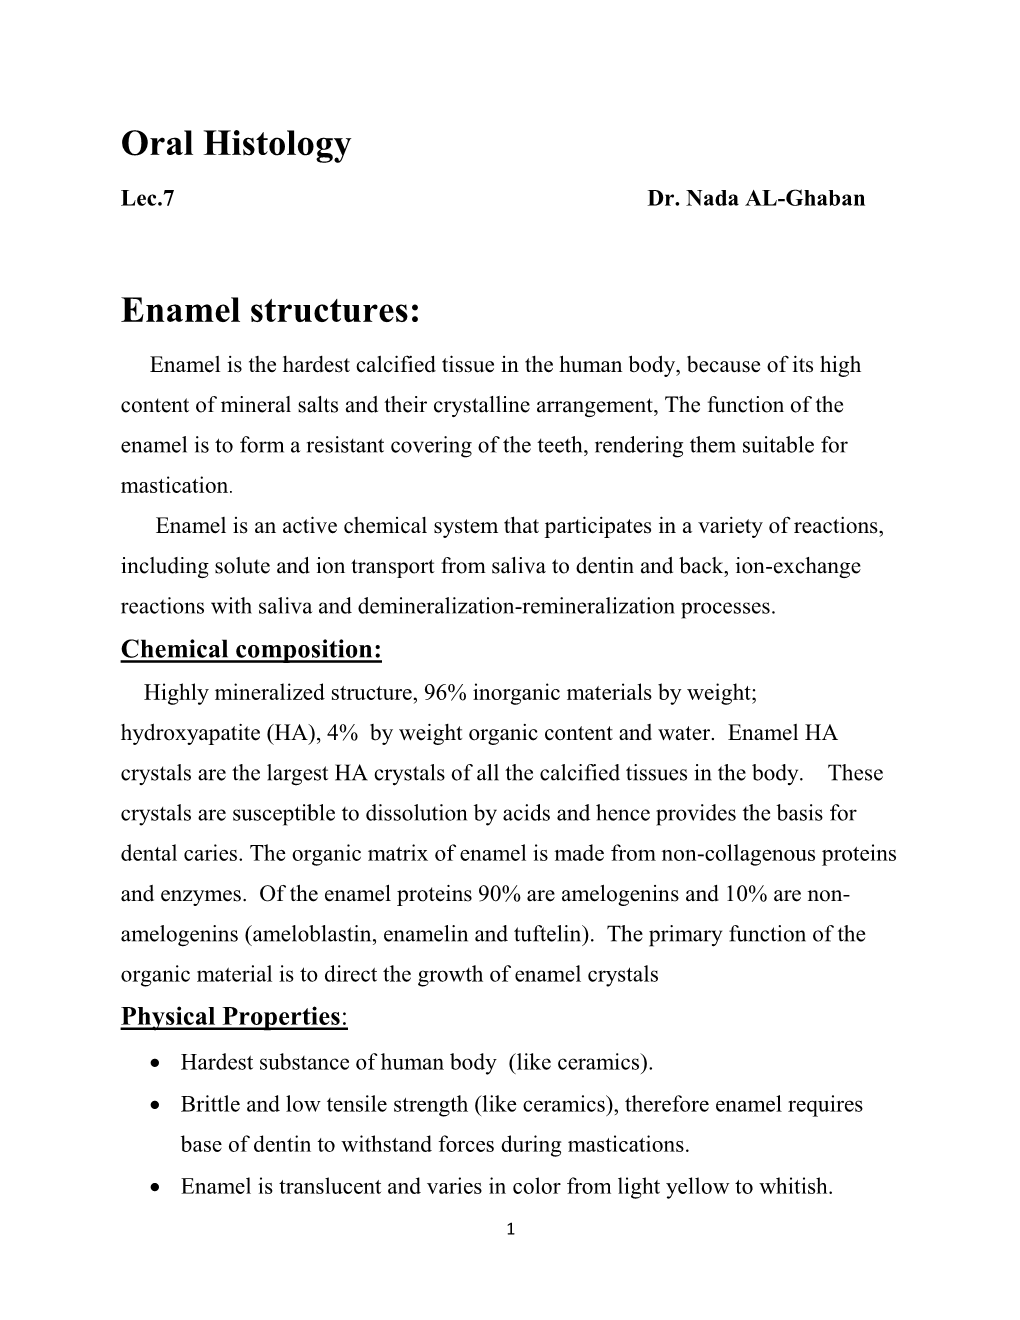 Oral Histology Enamel Structures